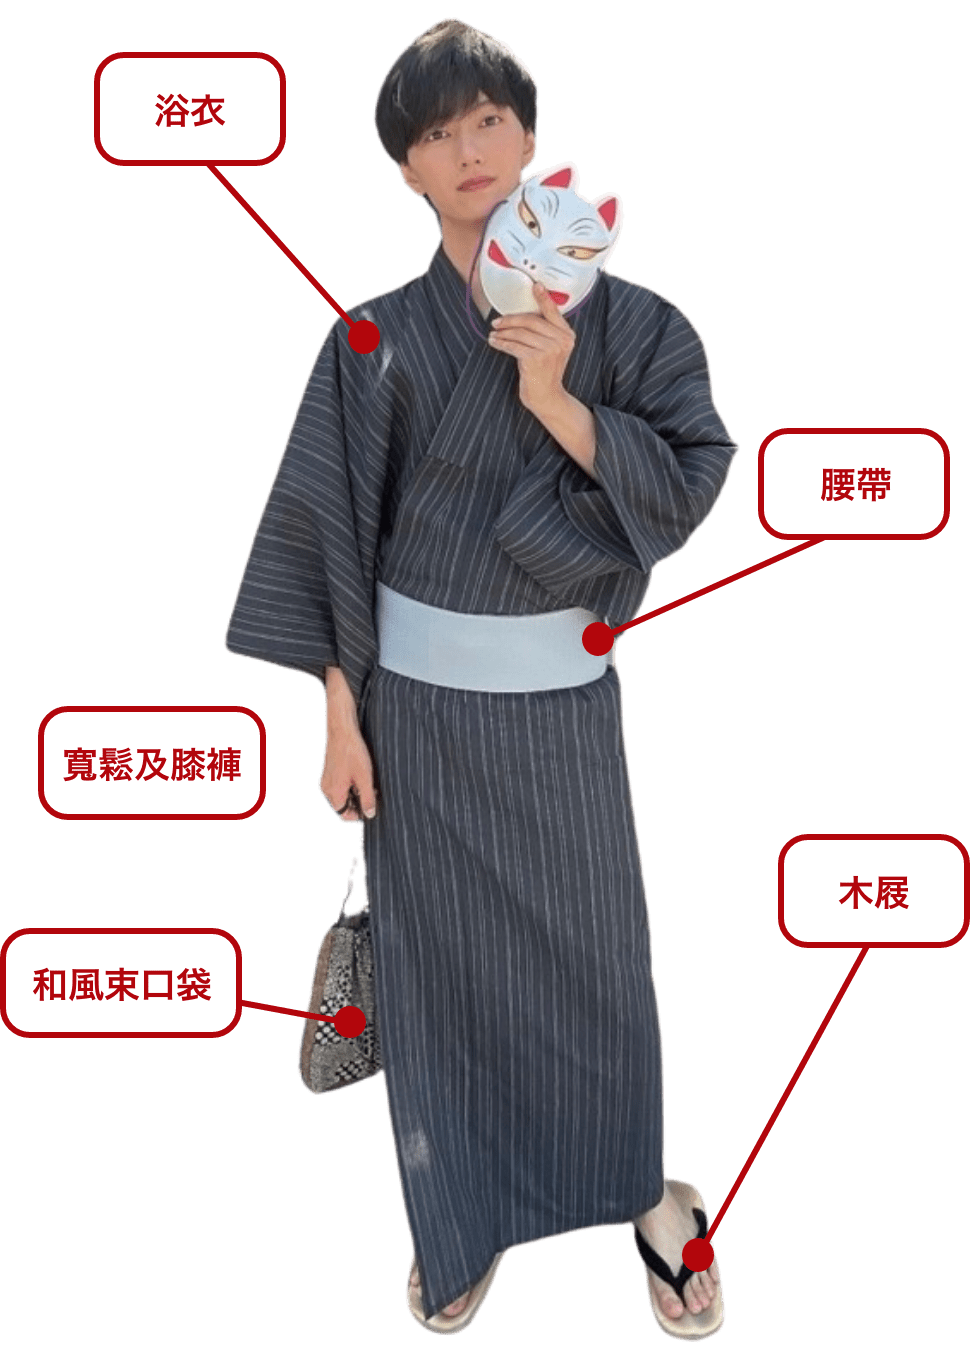 Items of Men's Yukata